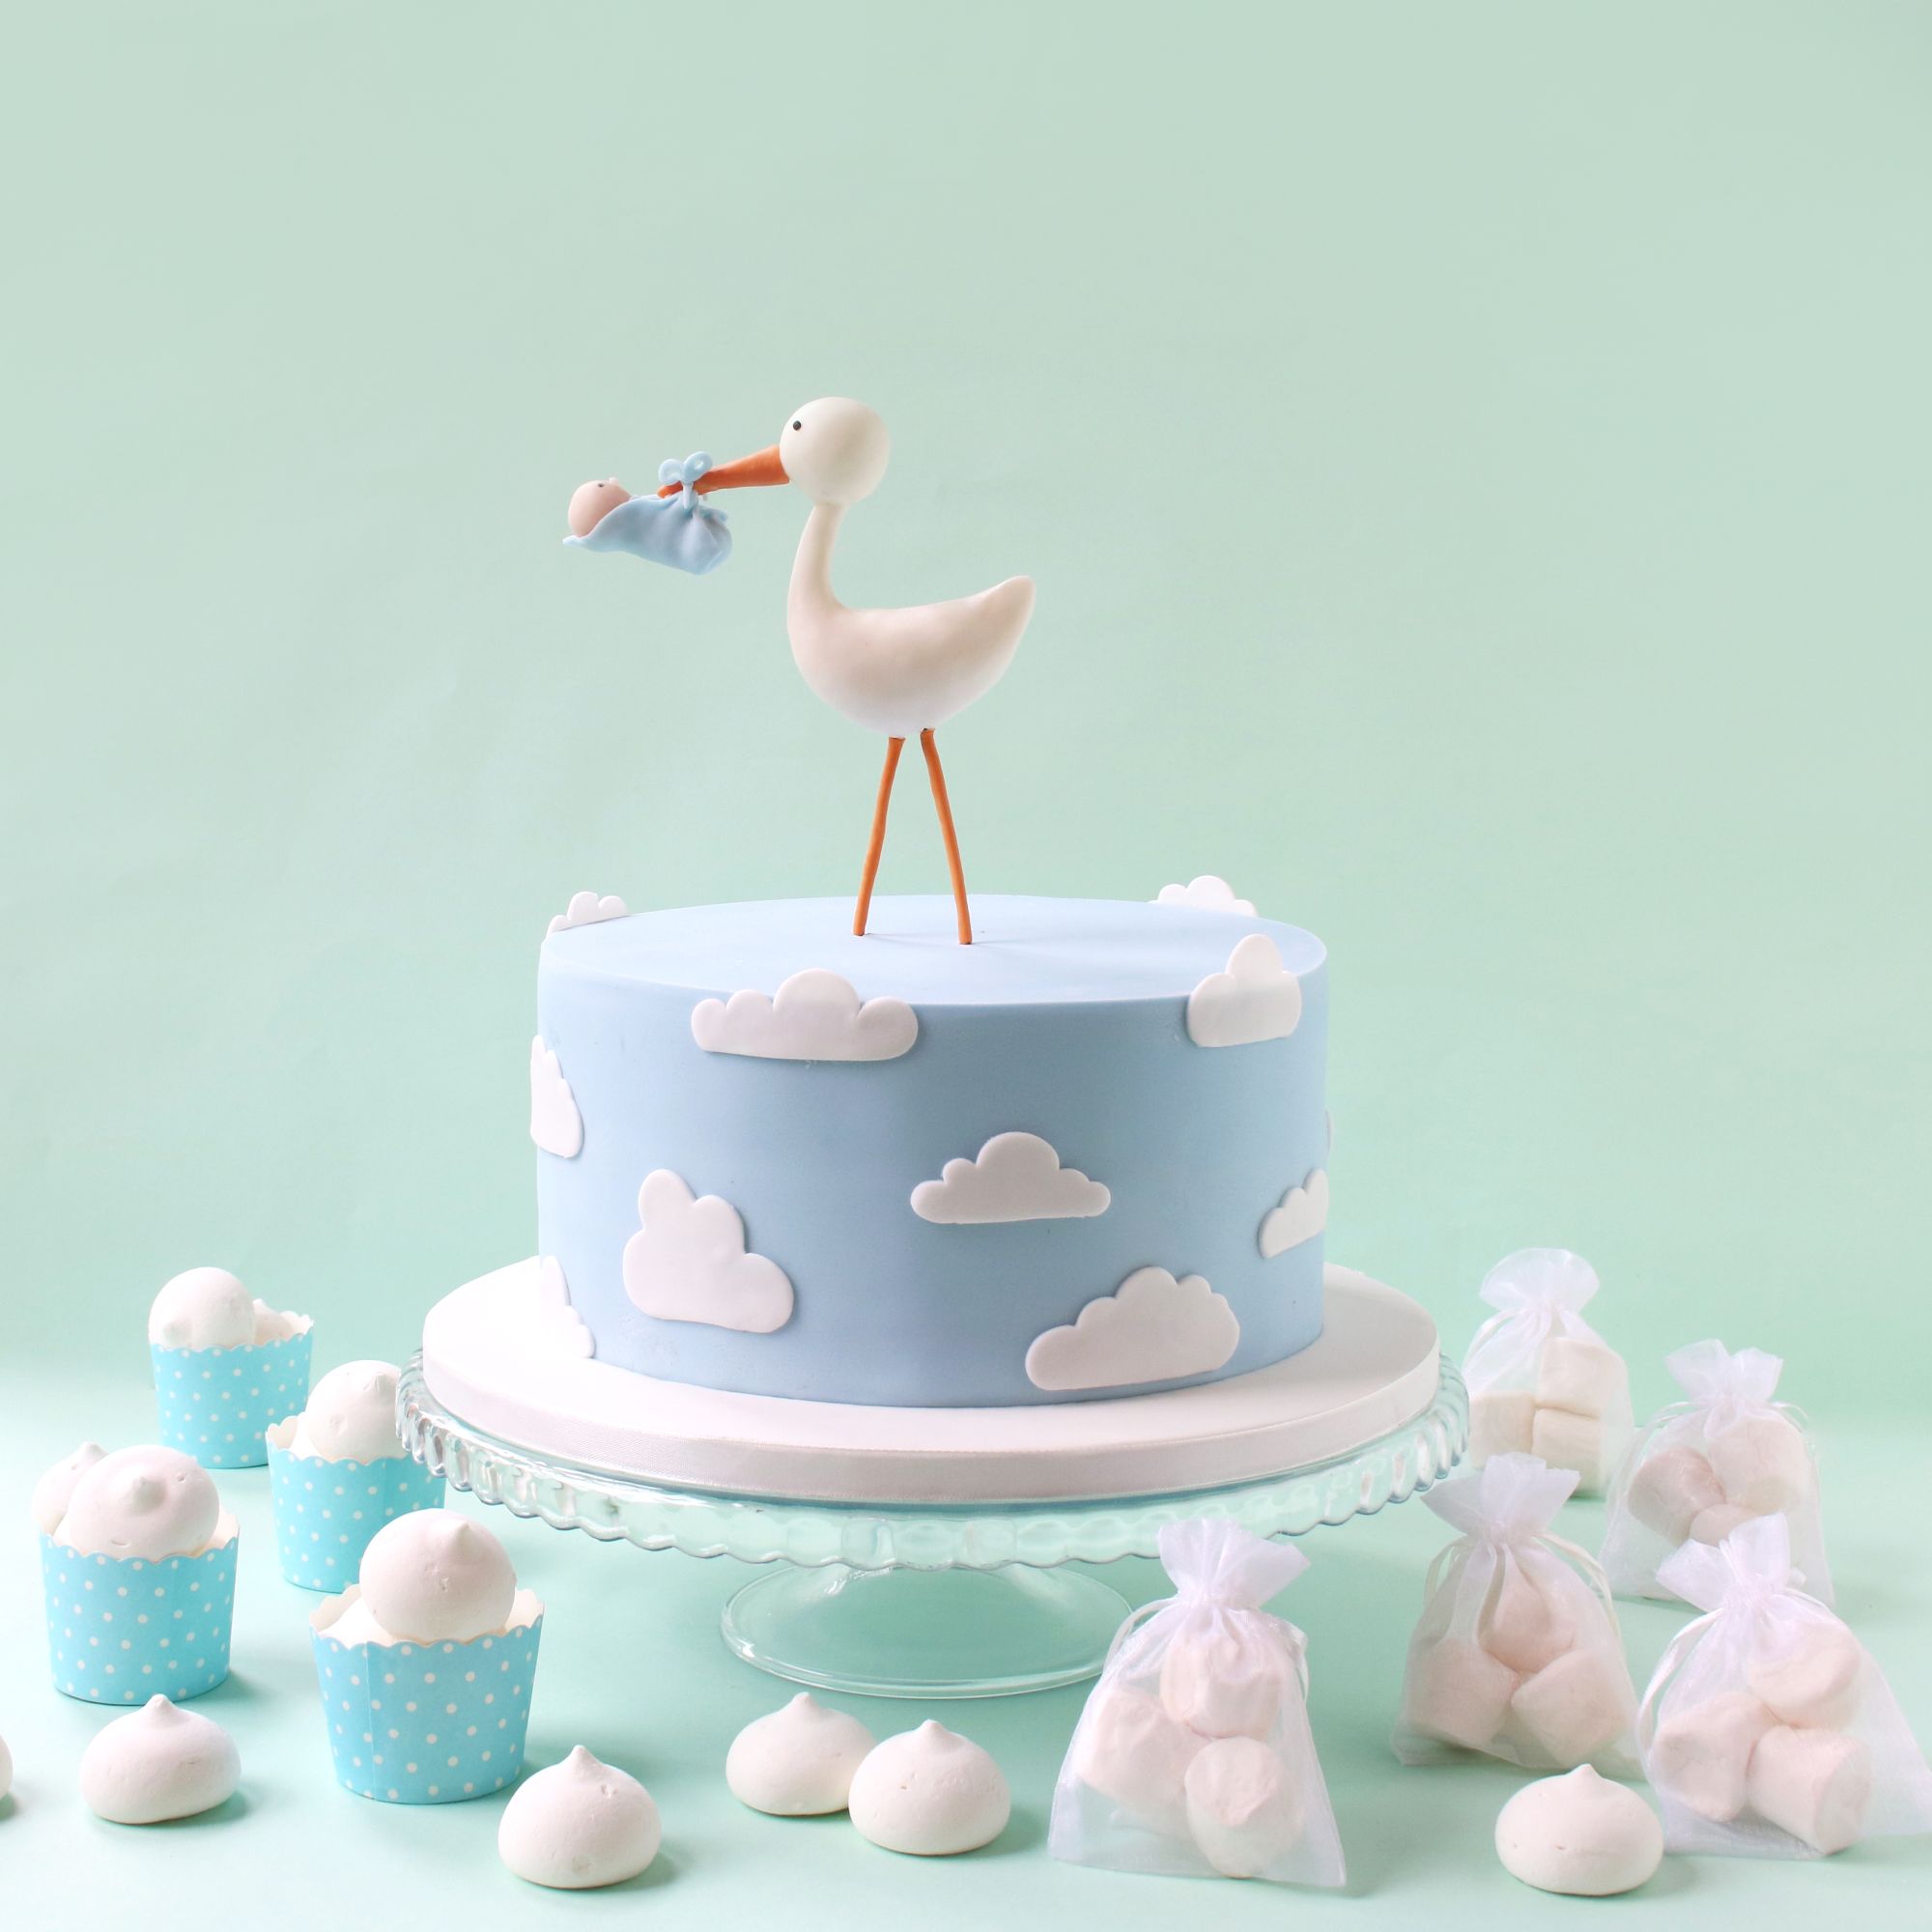 Newborn Girl or Boy Cake [CAKE030] - £35.99 | CakeSheffield.co.uk